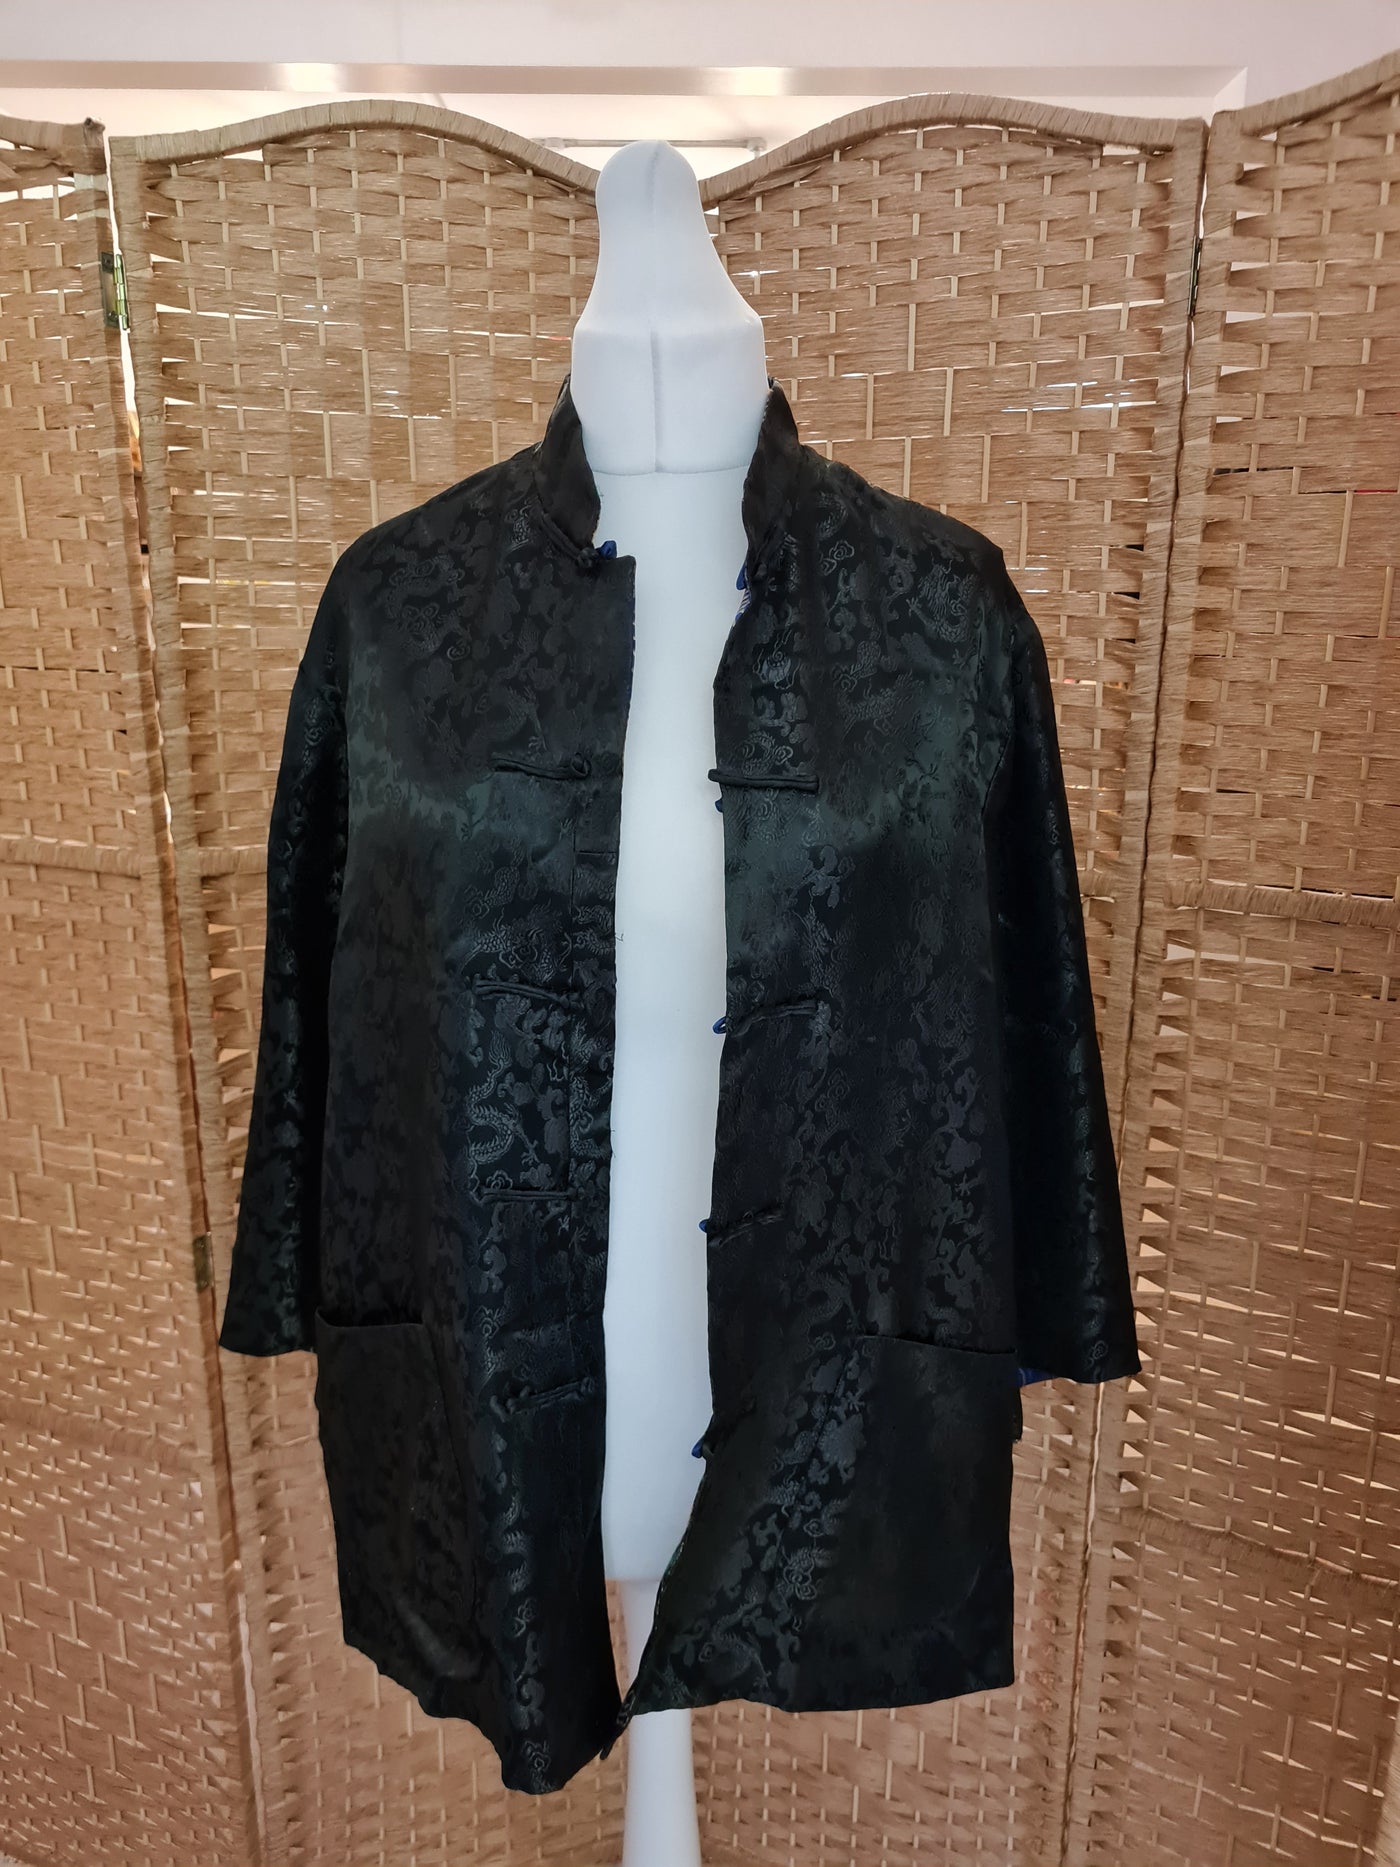 Handmade Oriental Reversible Jacket One size